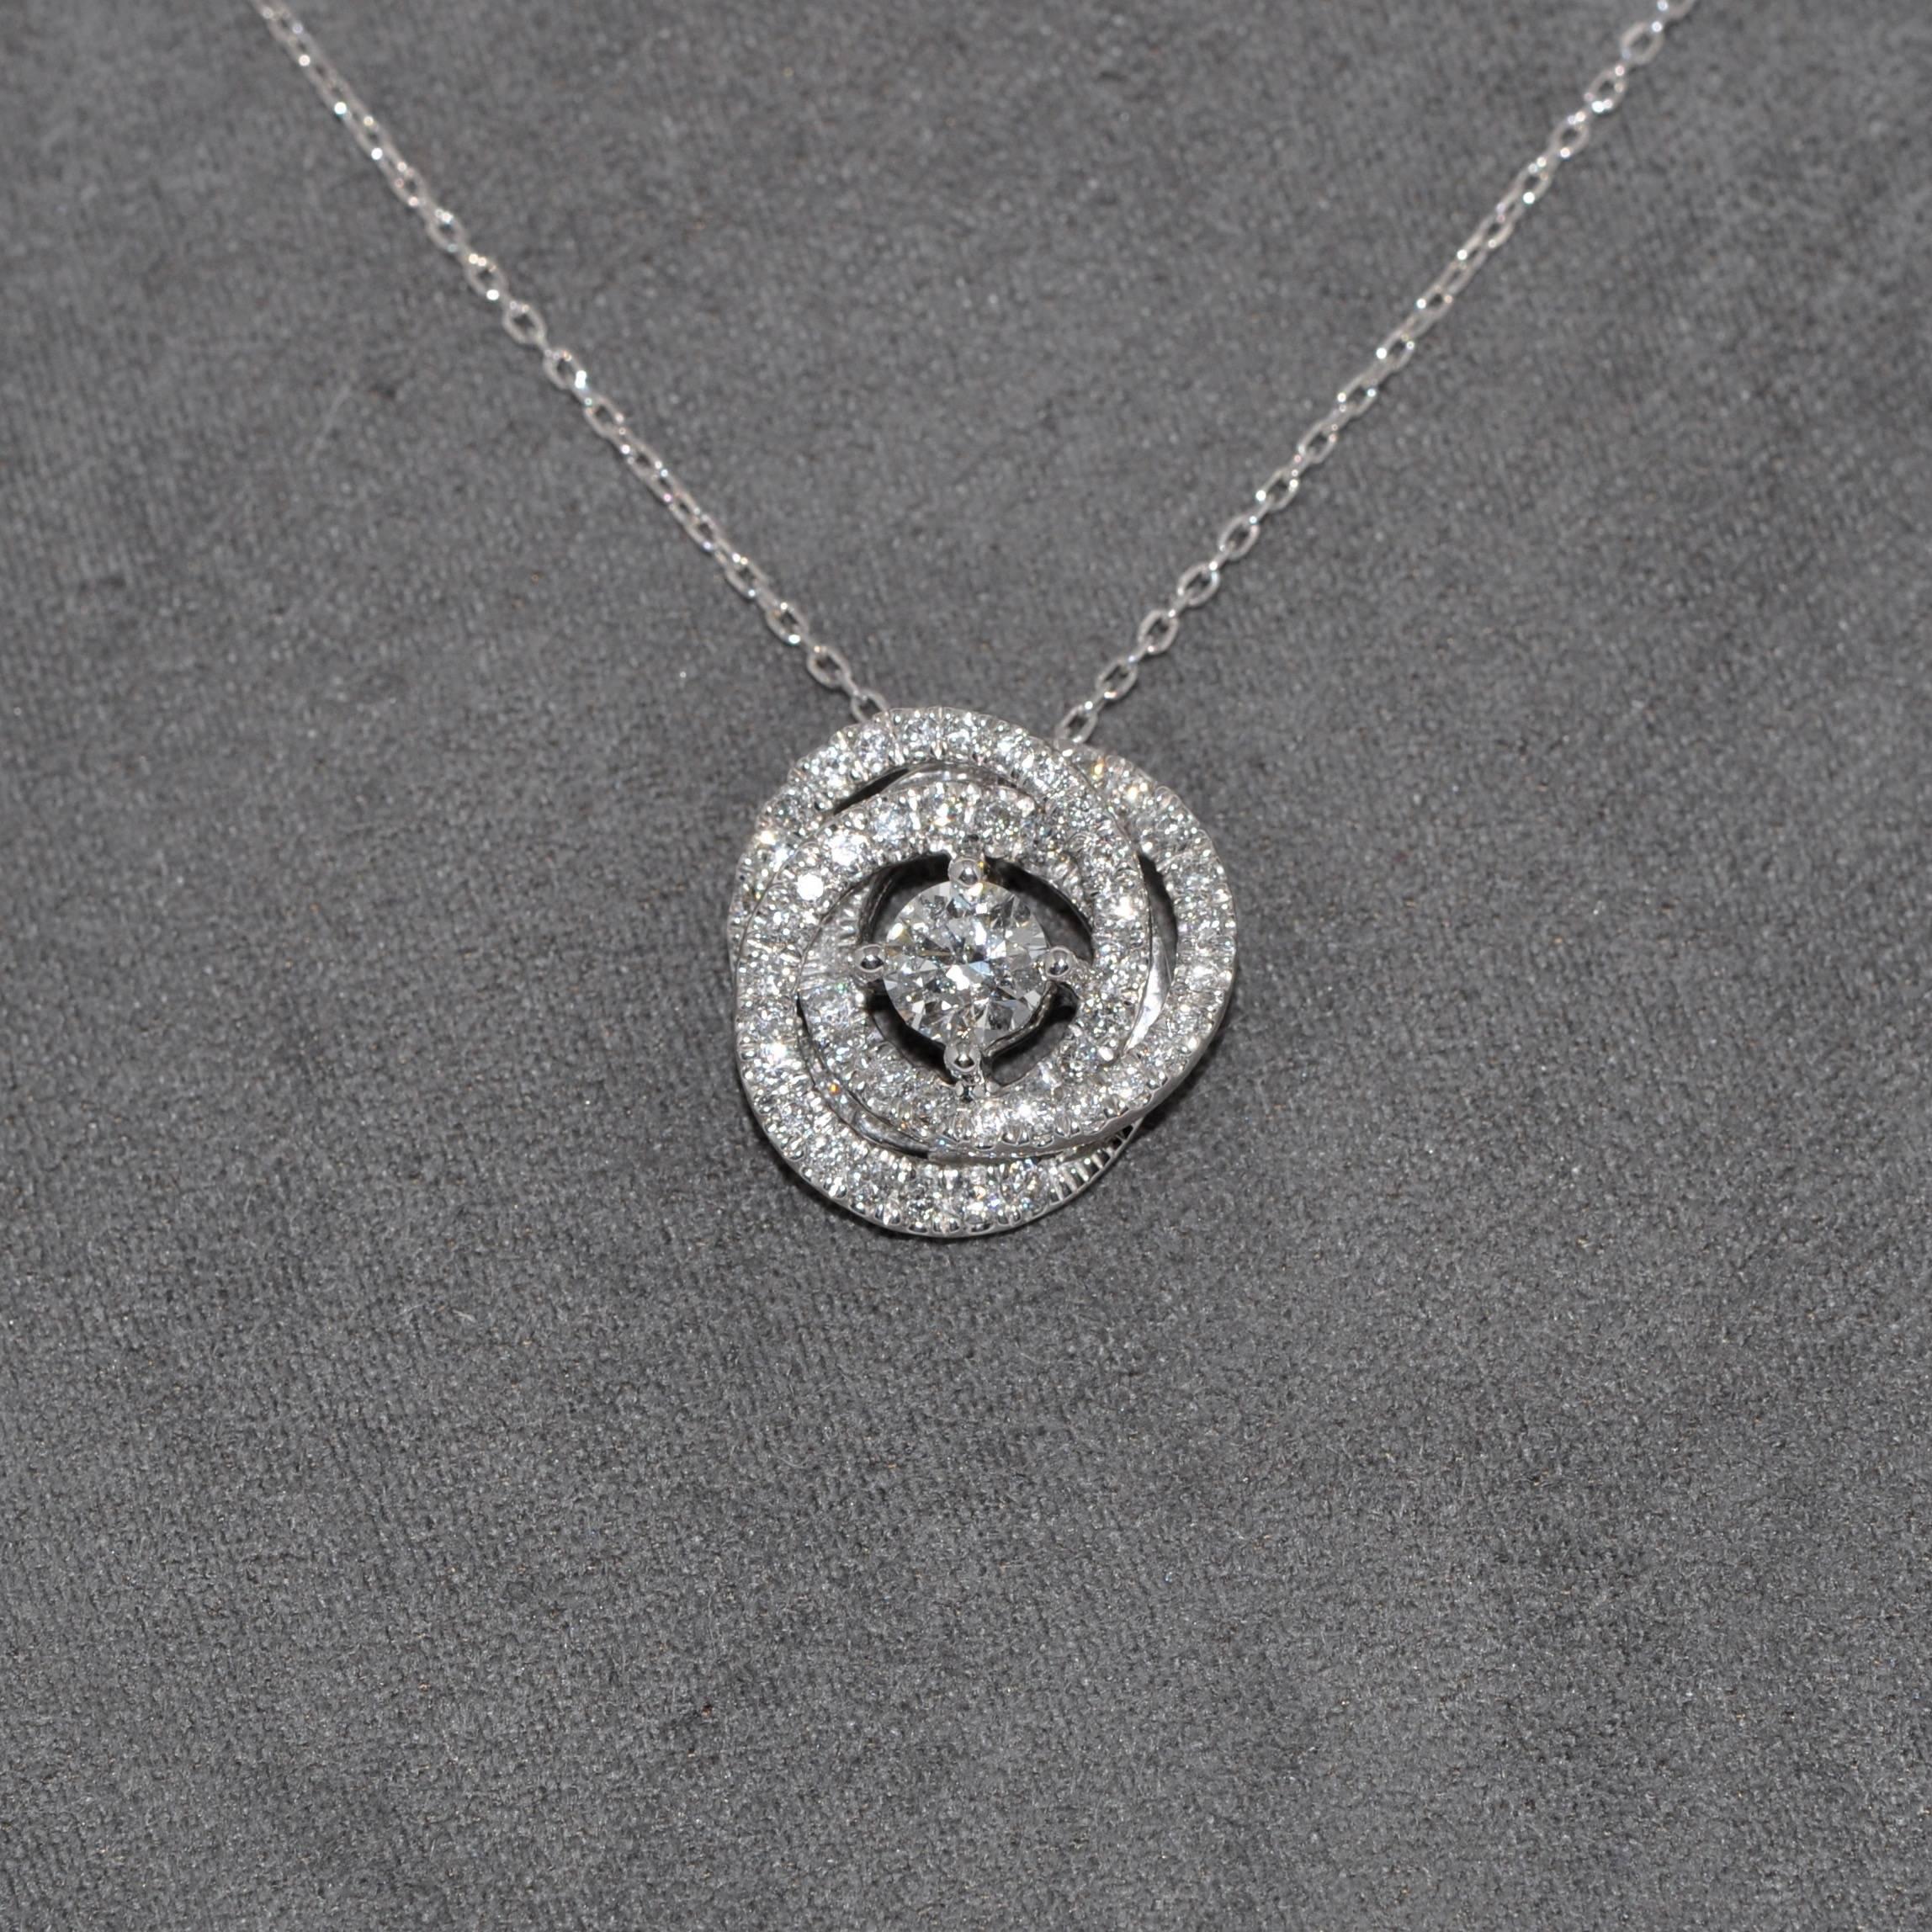 Diamonds G SI and White Gold 18 Carat Pendant Necklace.
52 Diamonds G SI 
White Gold 18 Carat 
45 centimeter